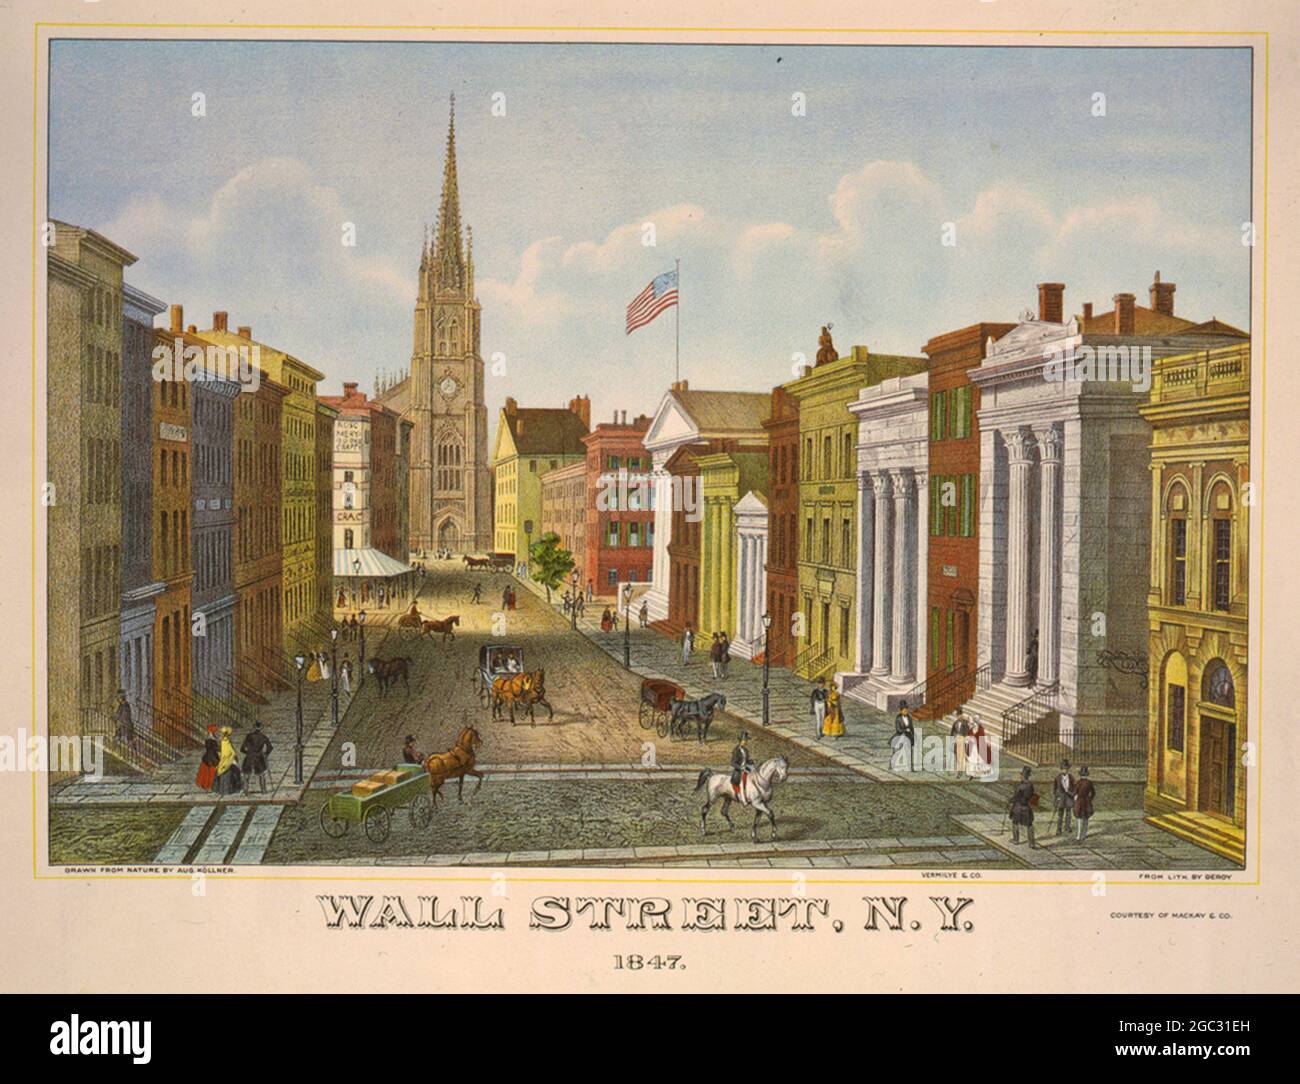 NEW YORK, USA - 1847 - Wall Street, New York in 1847 as painted by the artist Augustus Kollner - Image: Geopix/Augustus Kollner Stock Photo